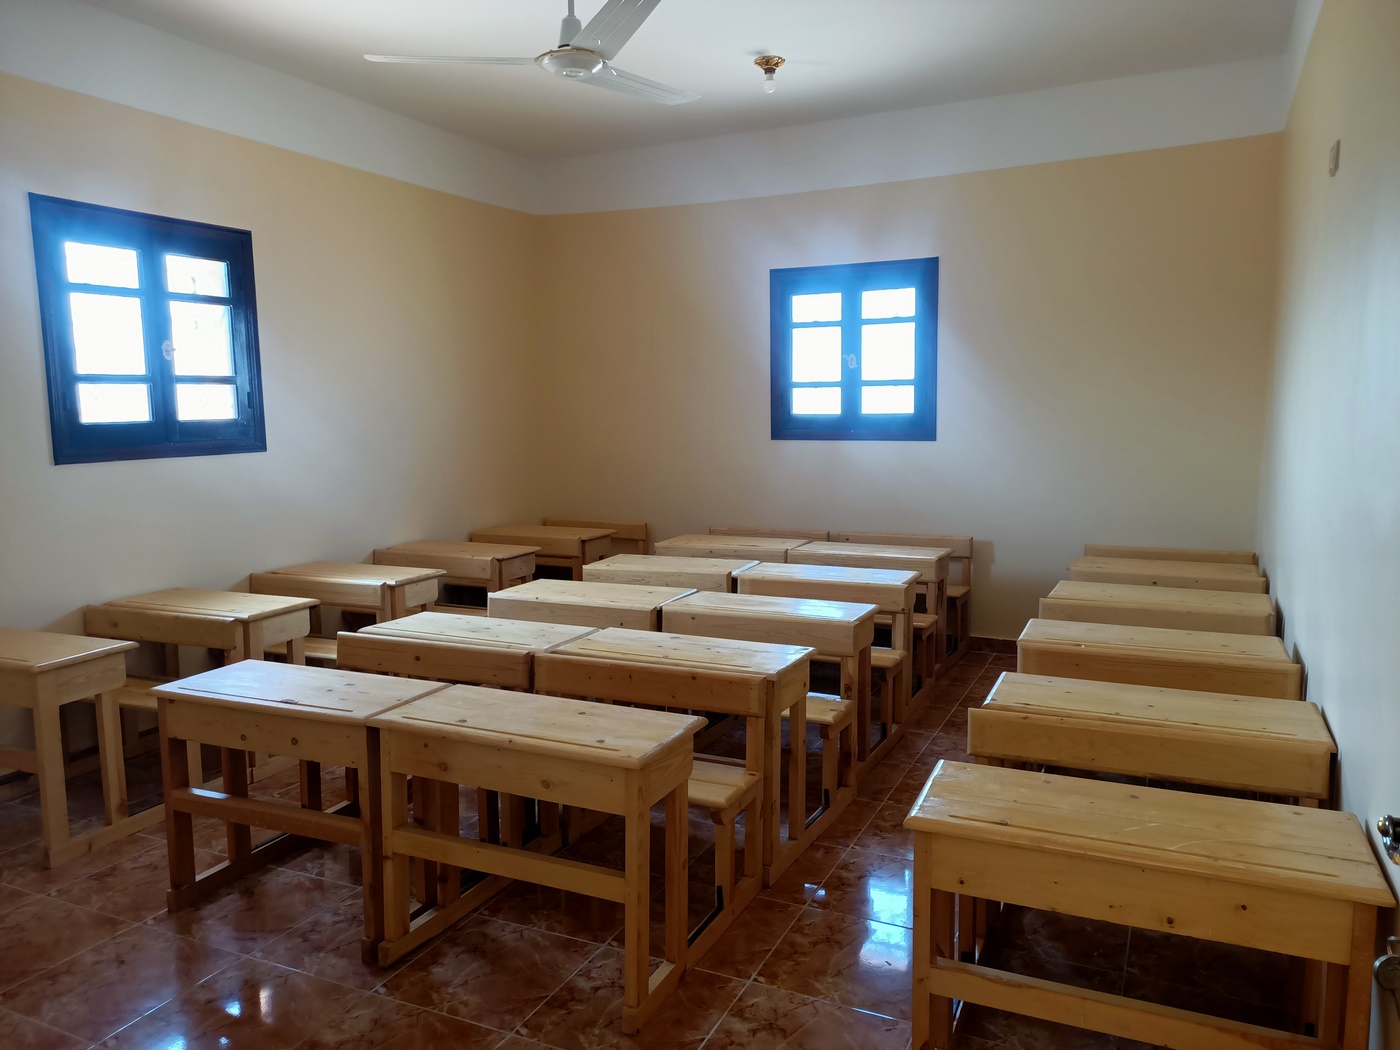 A Quranic memorization center consisting of a single classroom